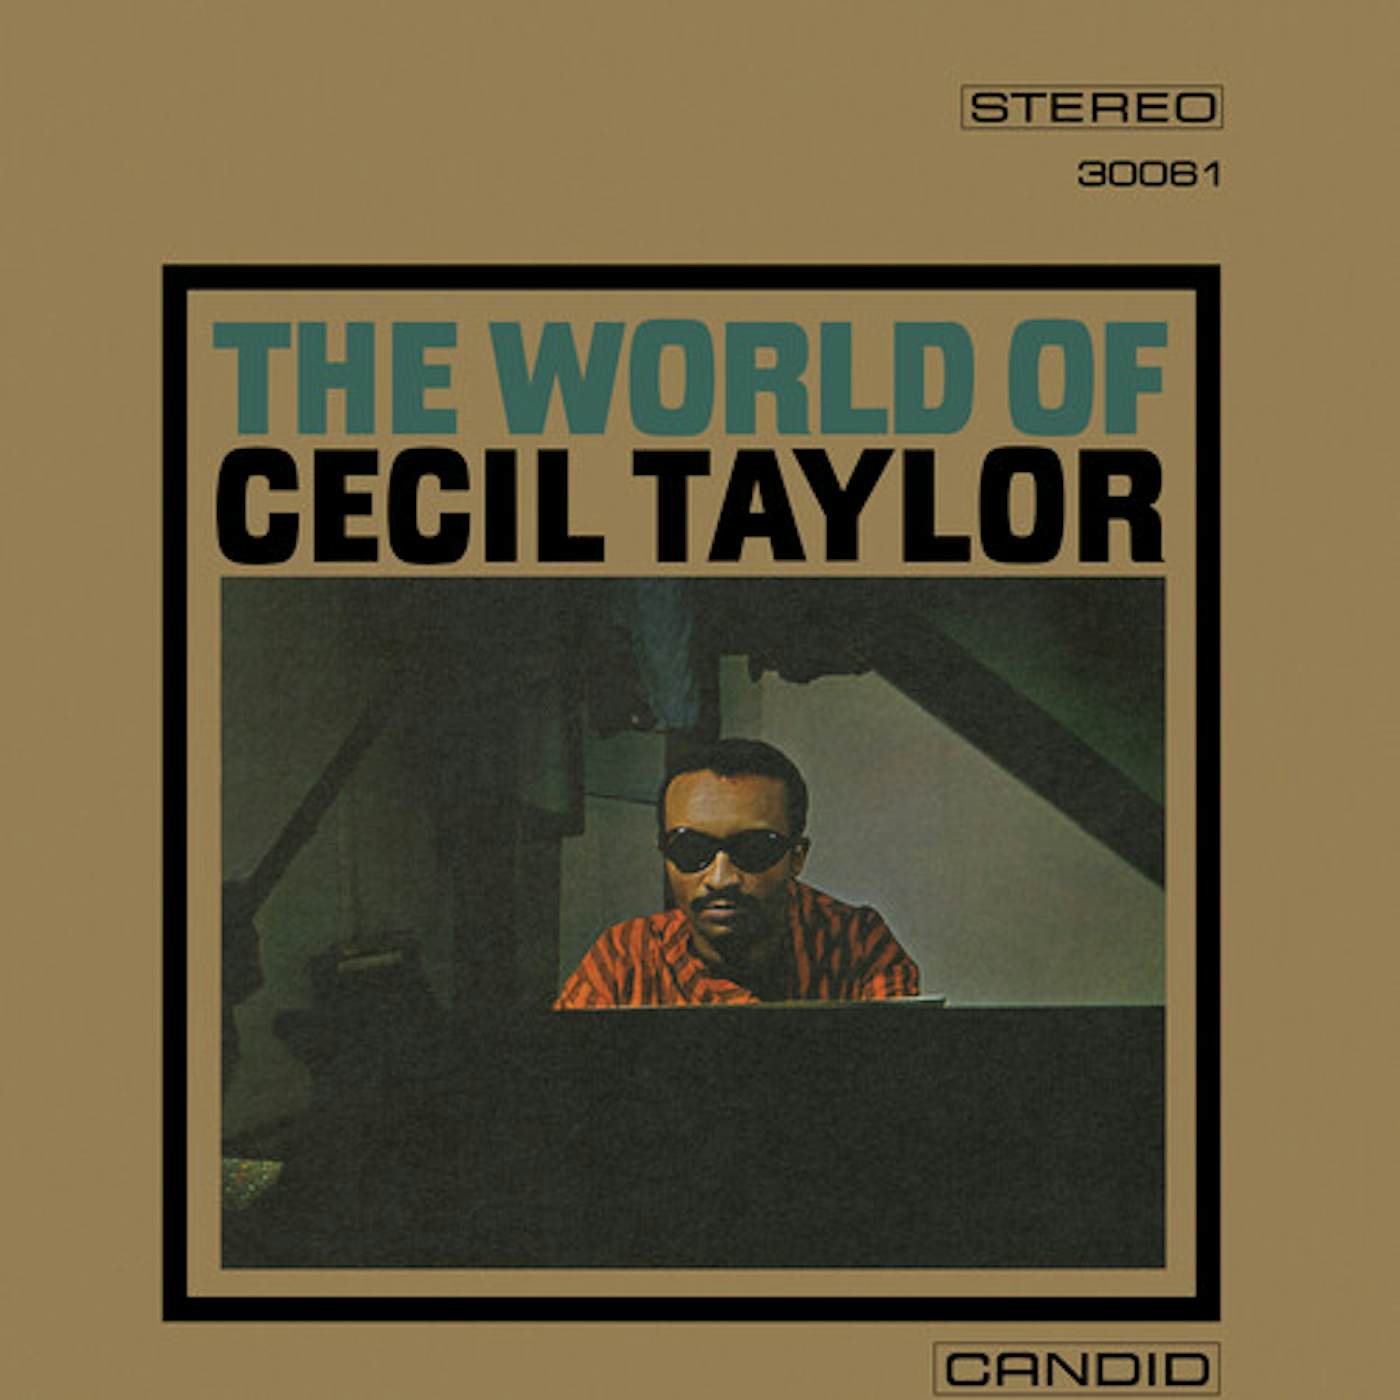 WORLD OF CECIL TAYLOR Vinyl Record